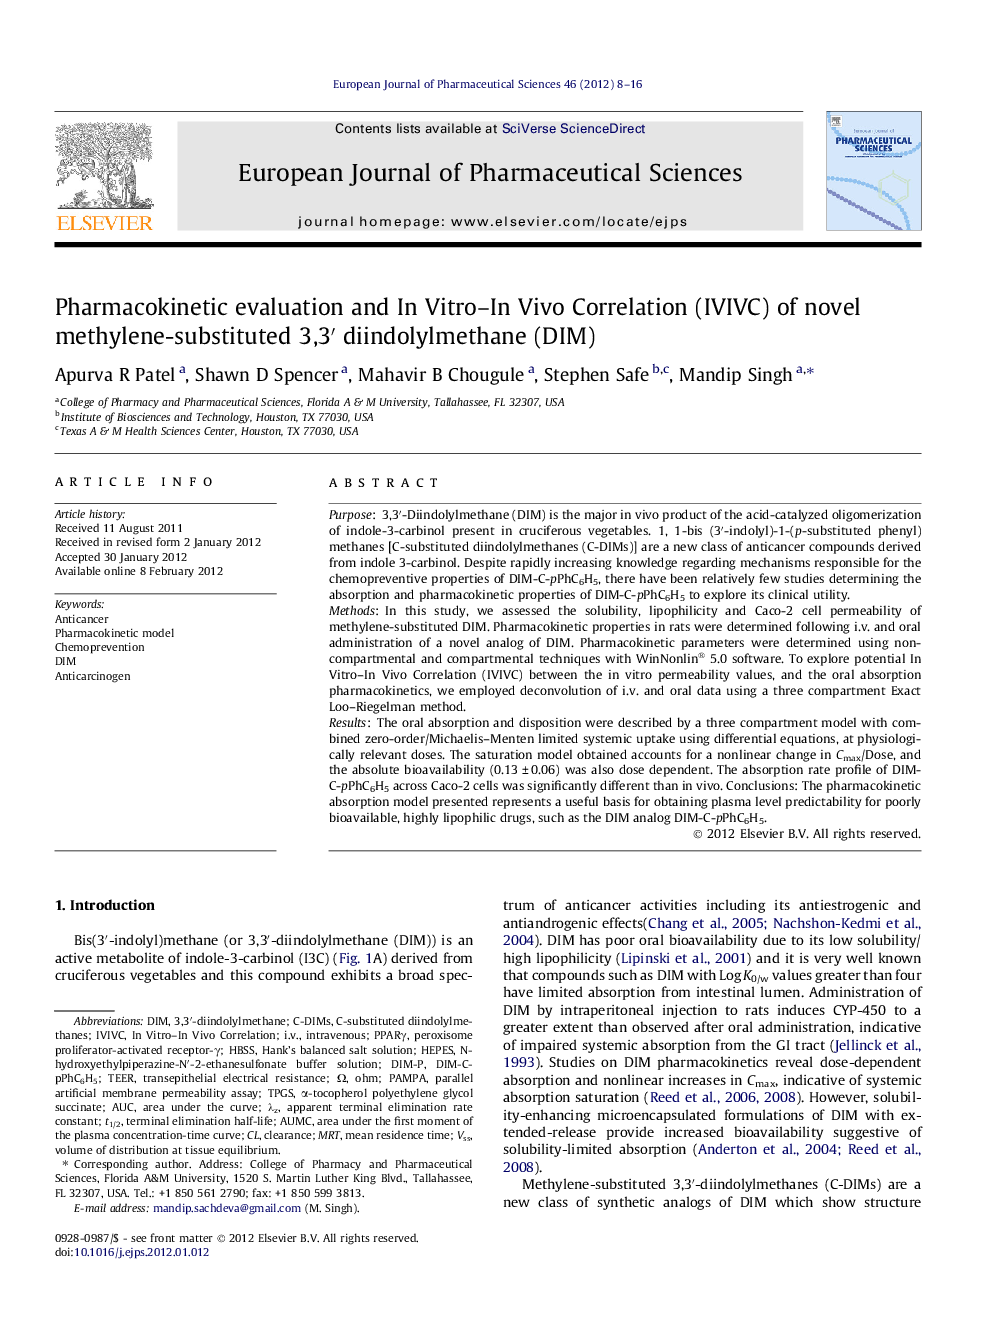 Pharmacokinetic evaluation and In Vitro–In Vivo Correlation (IVIVC) of novel methylene-substituted 3,3′ diindolylmethane (DIM)